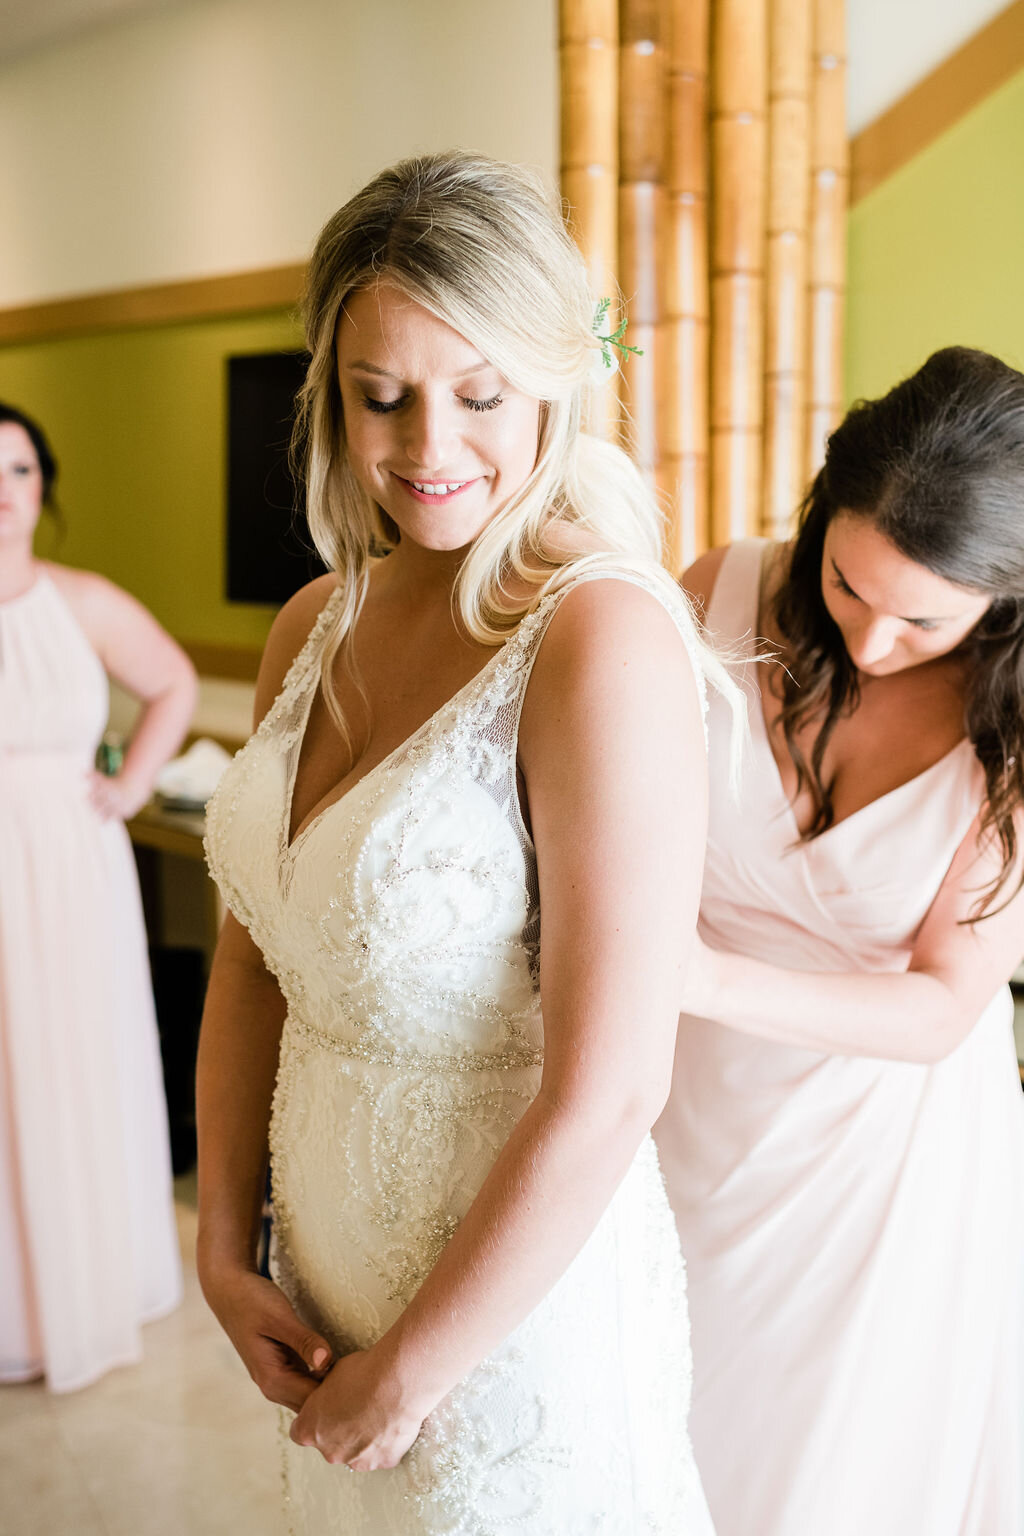 Bridesmaid buttoning up bride's wedding dress